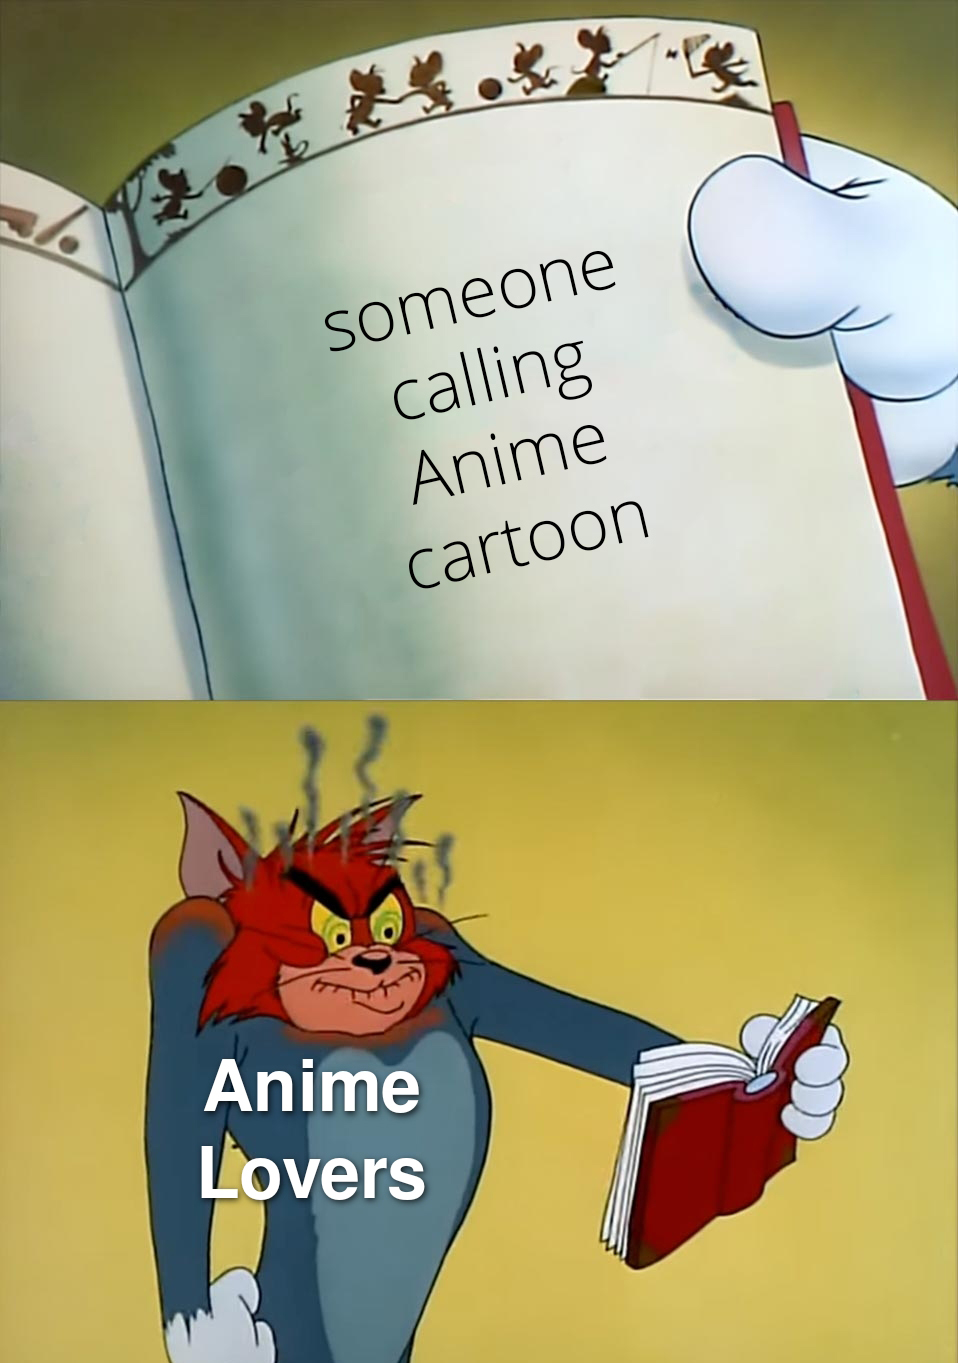 dank memes - angry tom reading book meme - someone calling Anime cartoon Anime Lovers